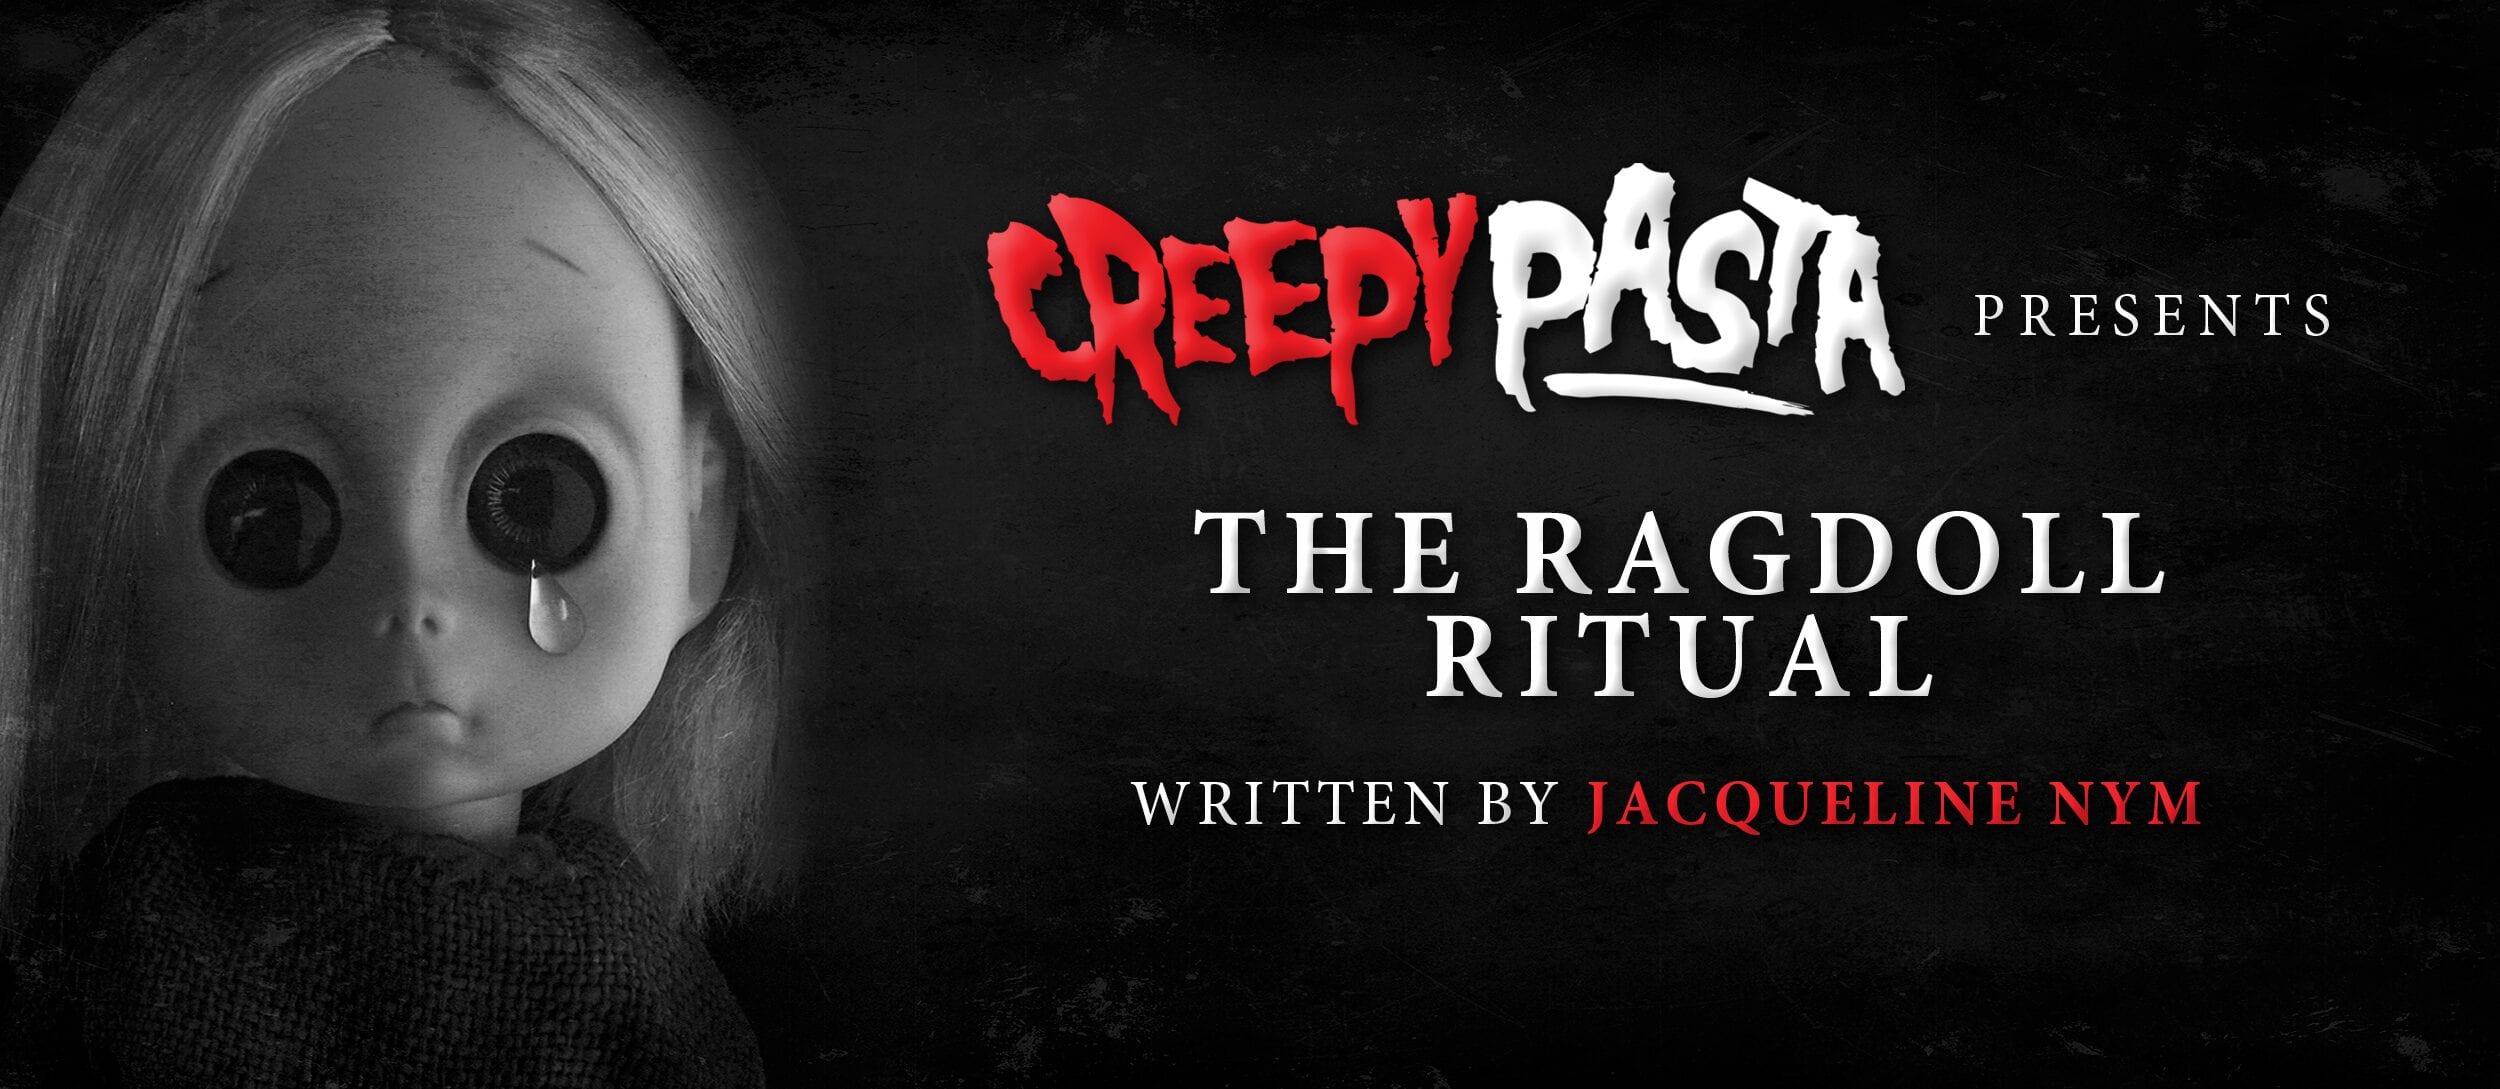 The Ragdoll Ritual Creepypasta - roblox midnight horrors nightmare 1 youtube